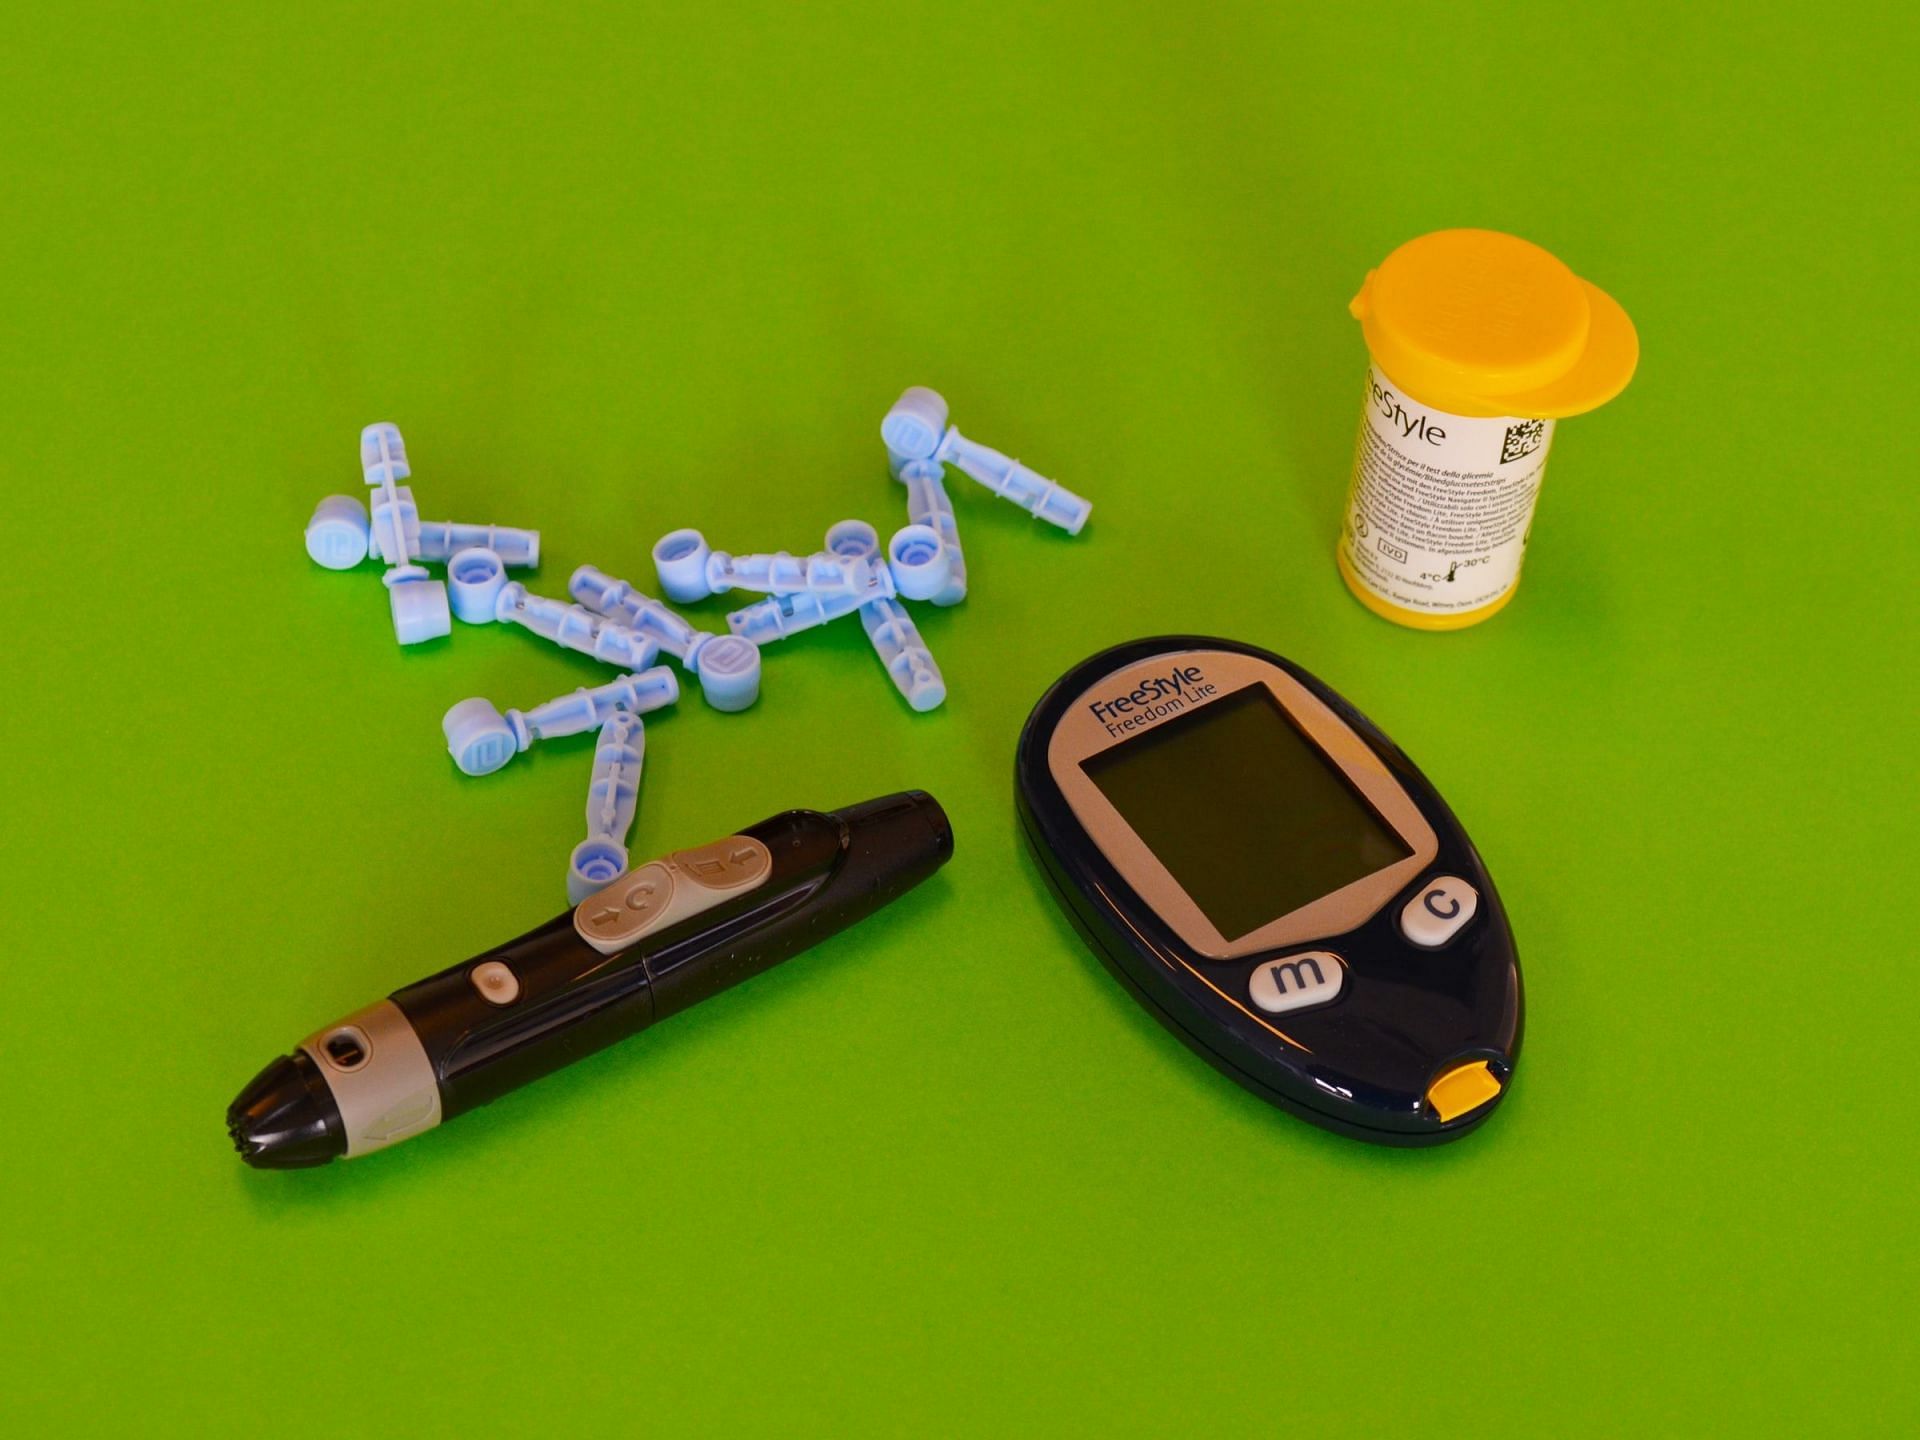 Controls Type 2 diabetes symptoms (Photo by Diabetesmagazijn.nl on Unsplash)